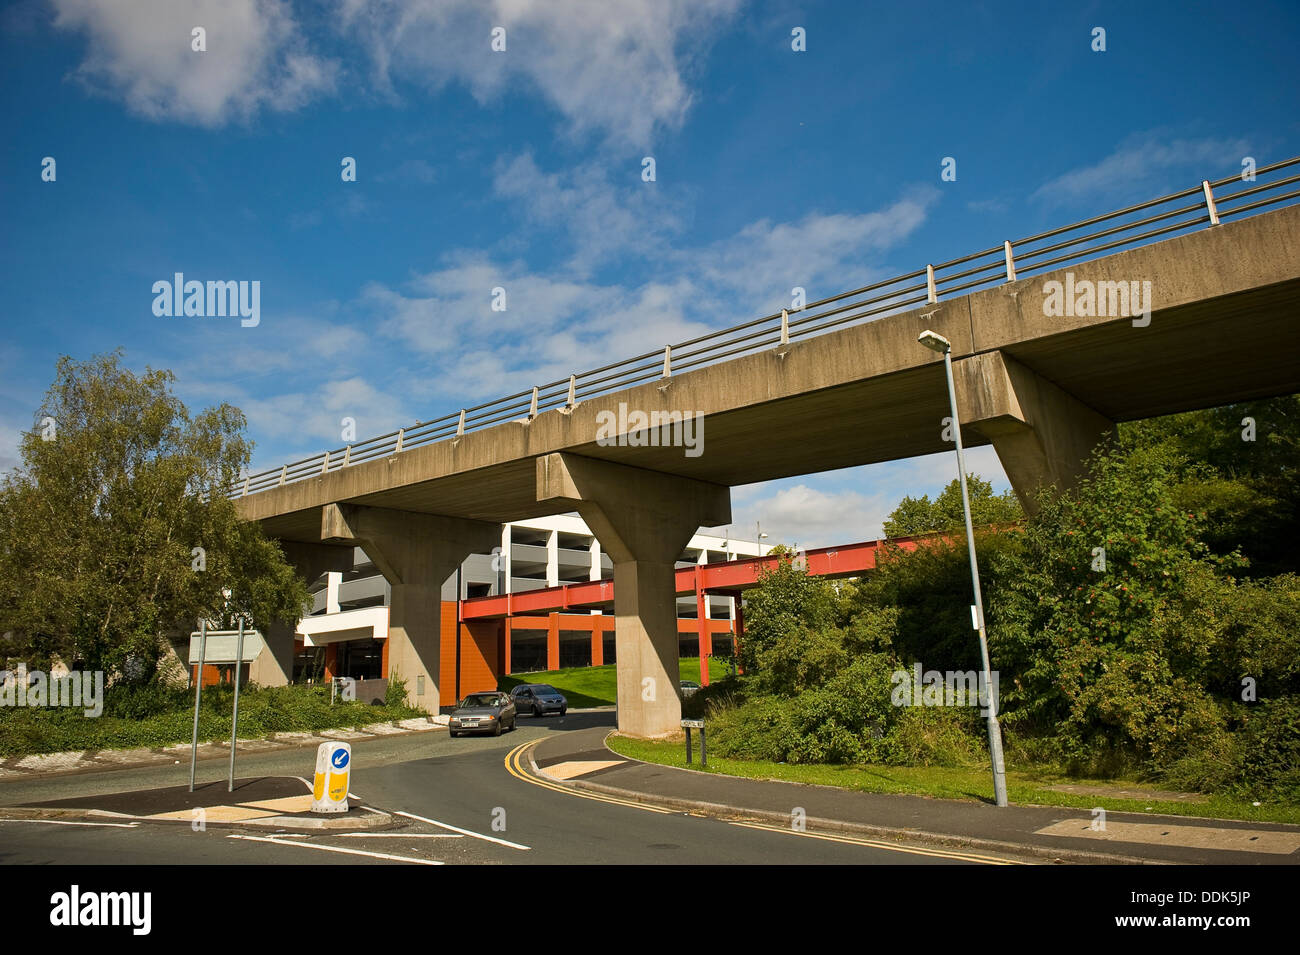 Bus lane in Runcorn town centre, Cheshire, UK Stock Photo